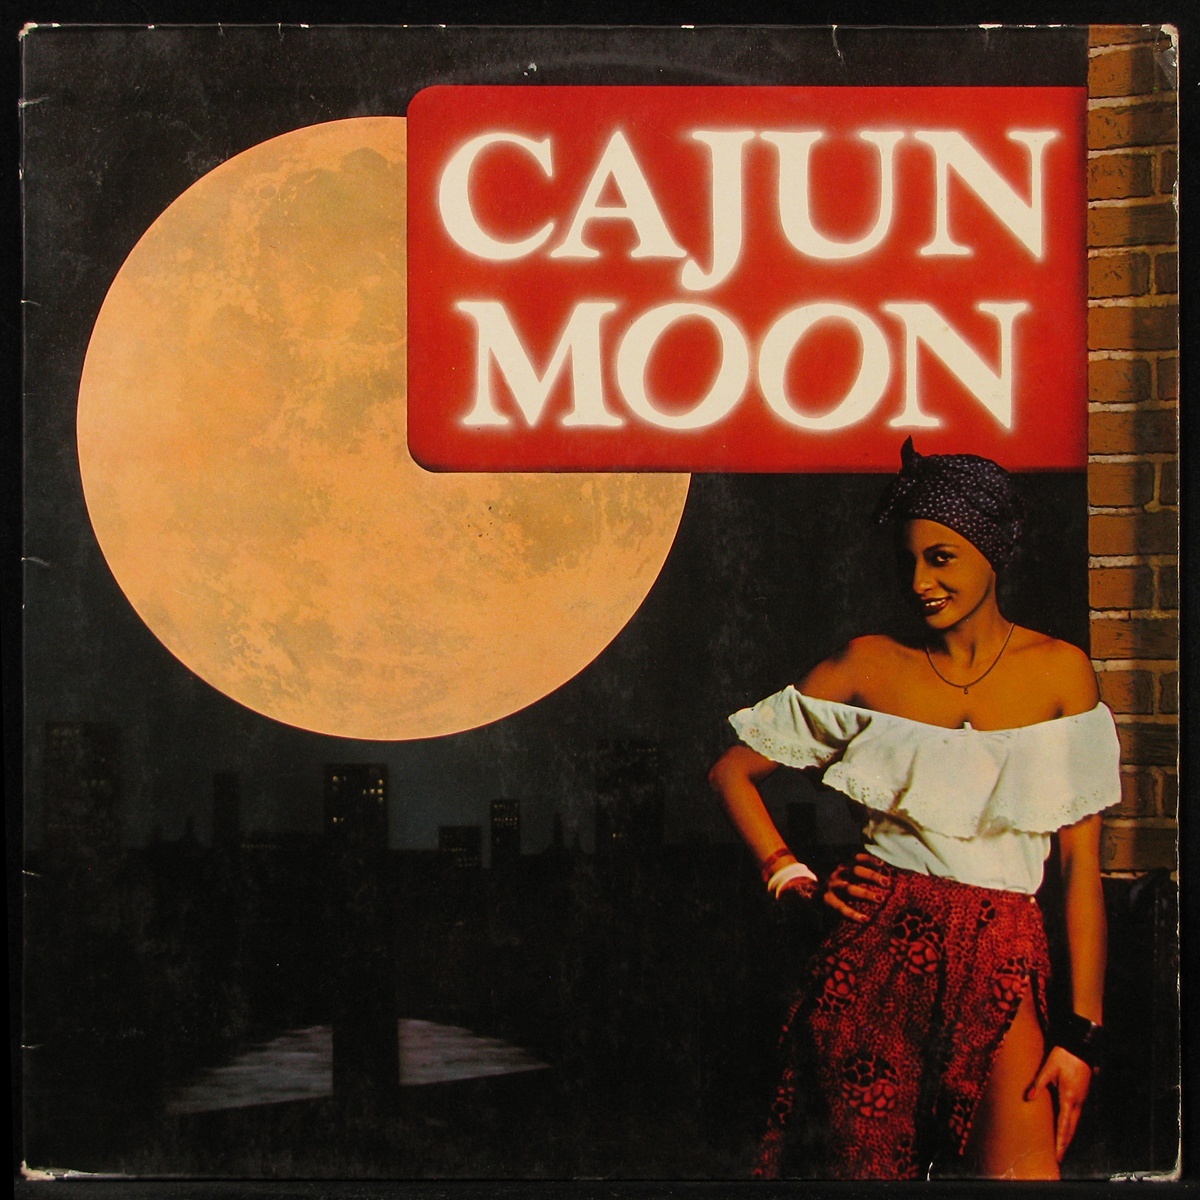 Lp moon. Cajun Moon "Cajun Moon". Редкие пластинки. Редкие виниловые пластинки. Susan Hofer - Cajun Moon.